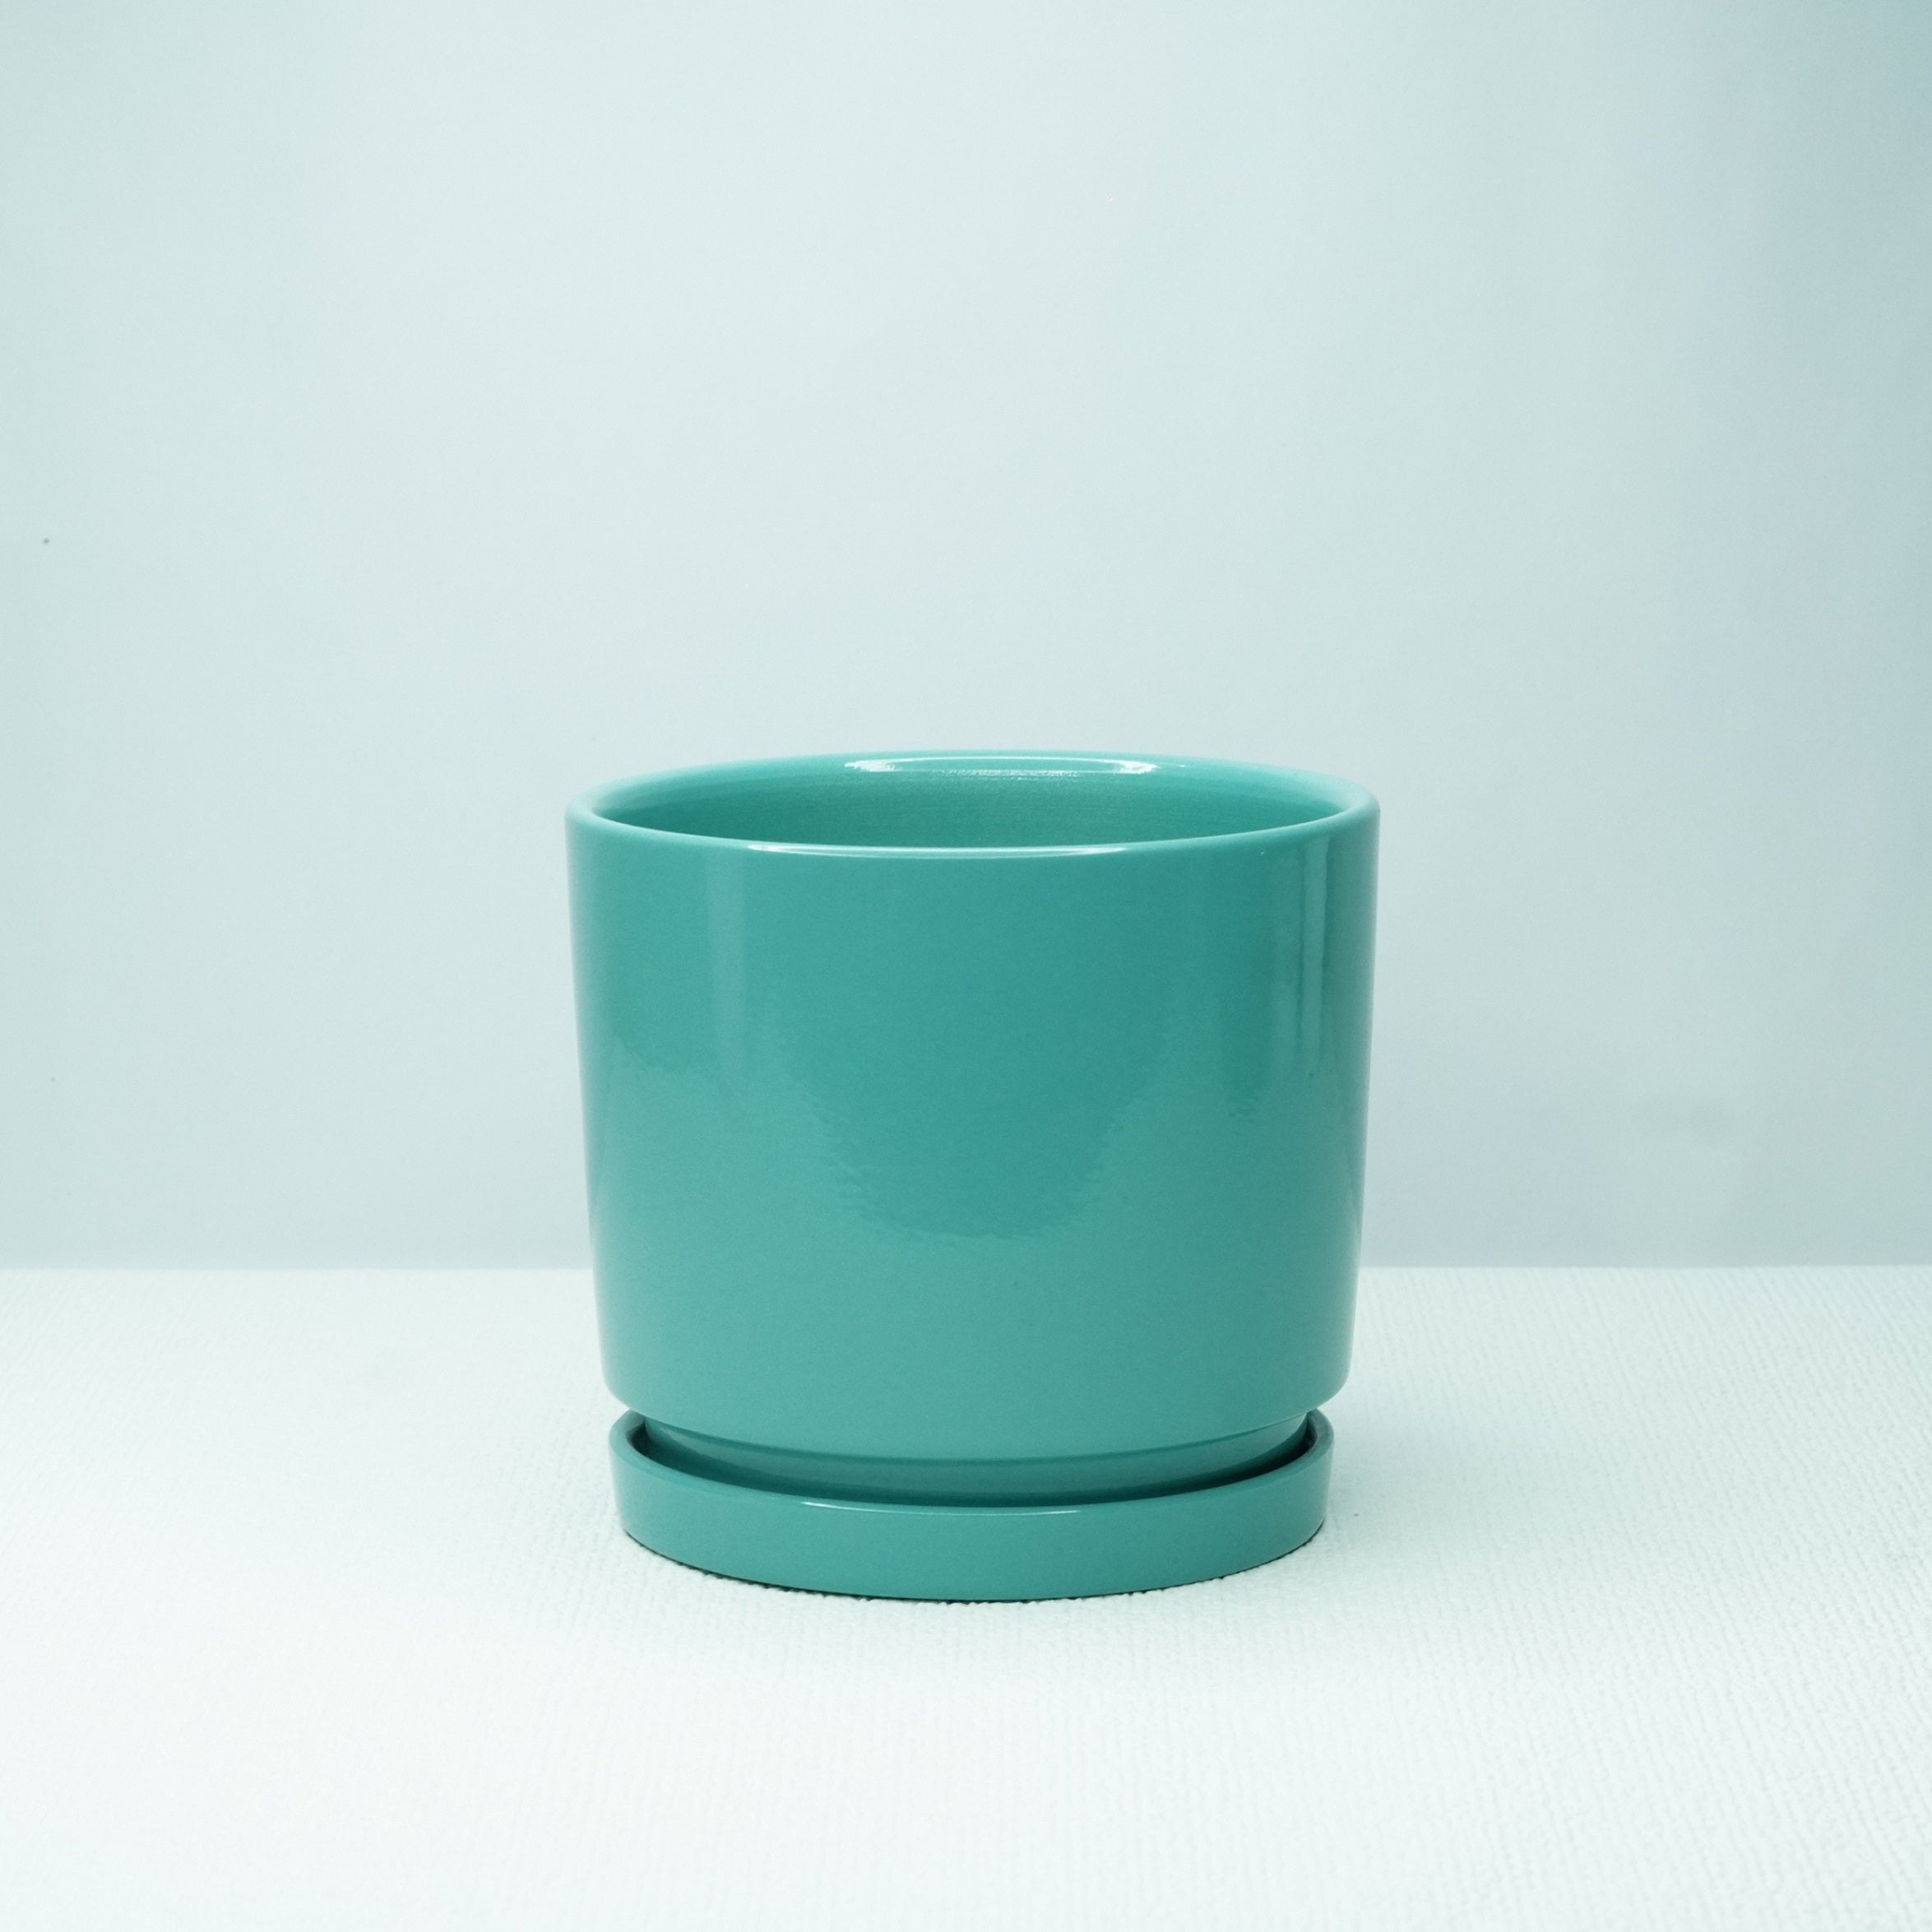 Glossy Teal Ceramic Pot 5 inch